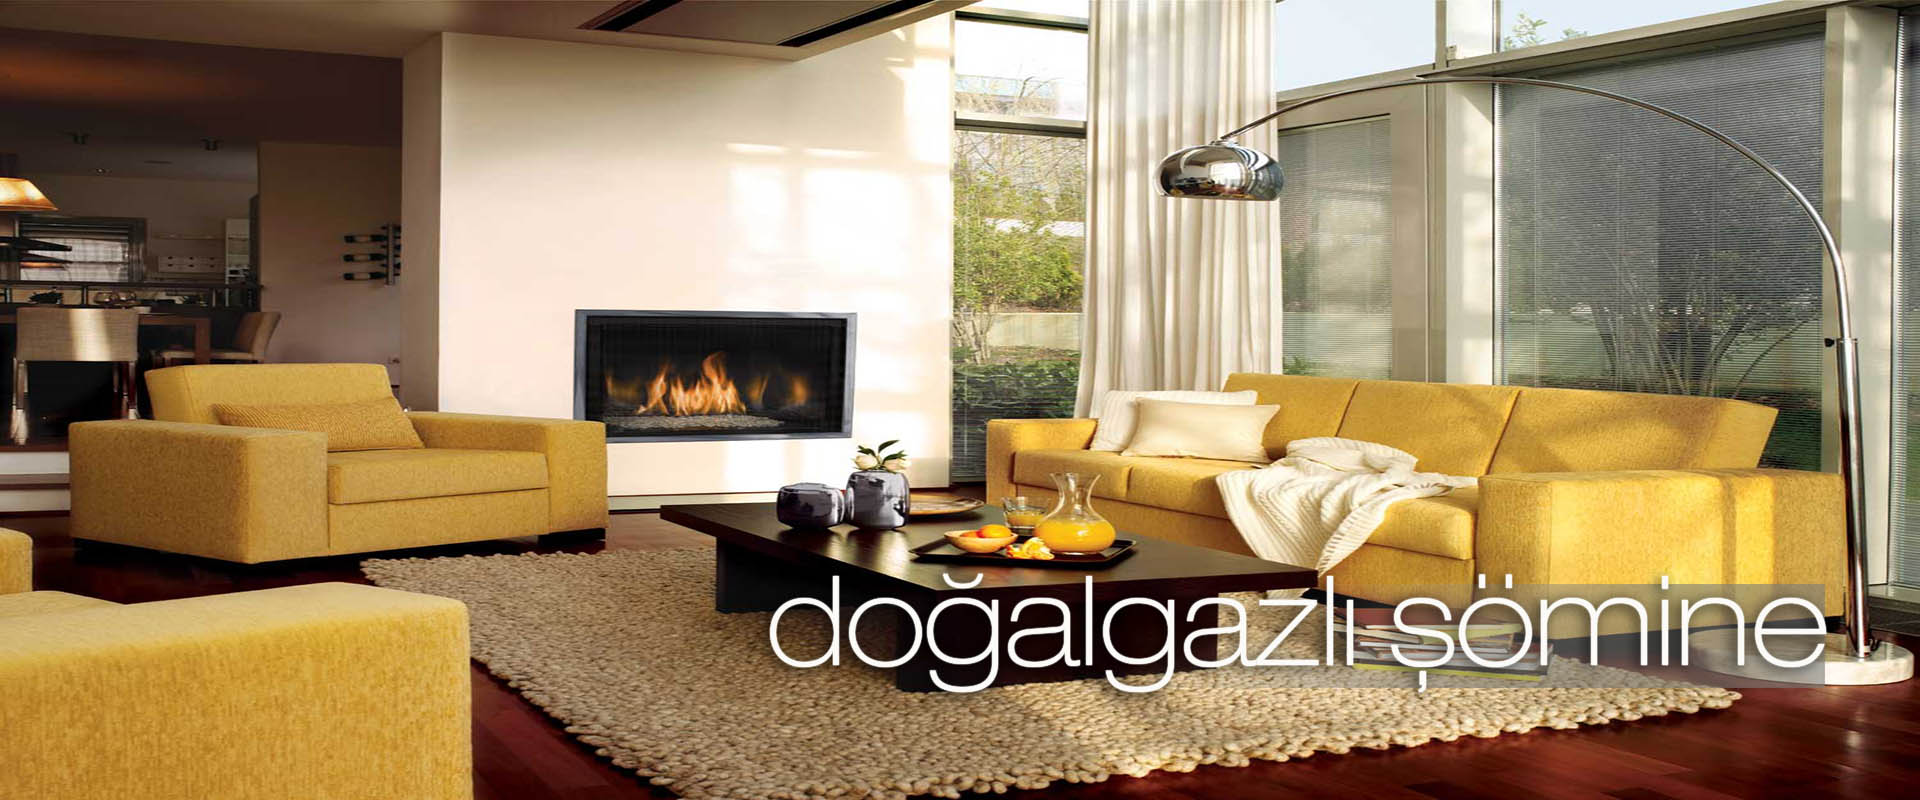 Green interior fireplace modern atmospheric lounge living room